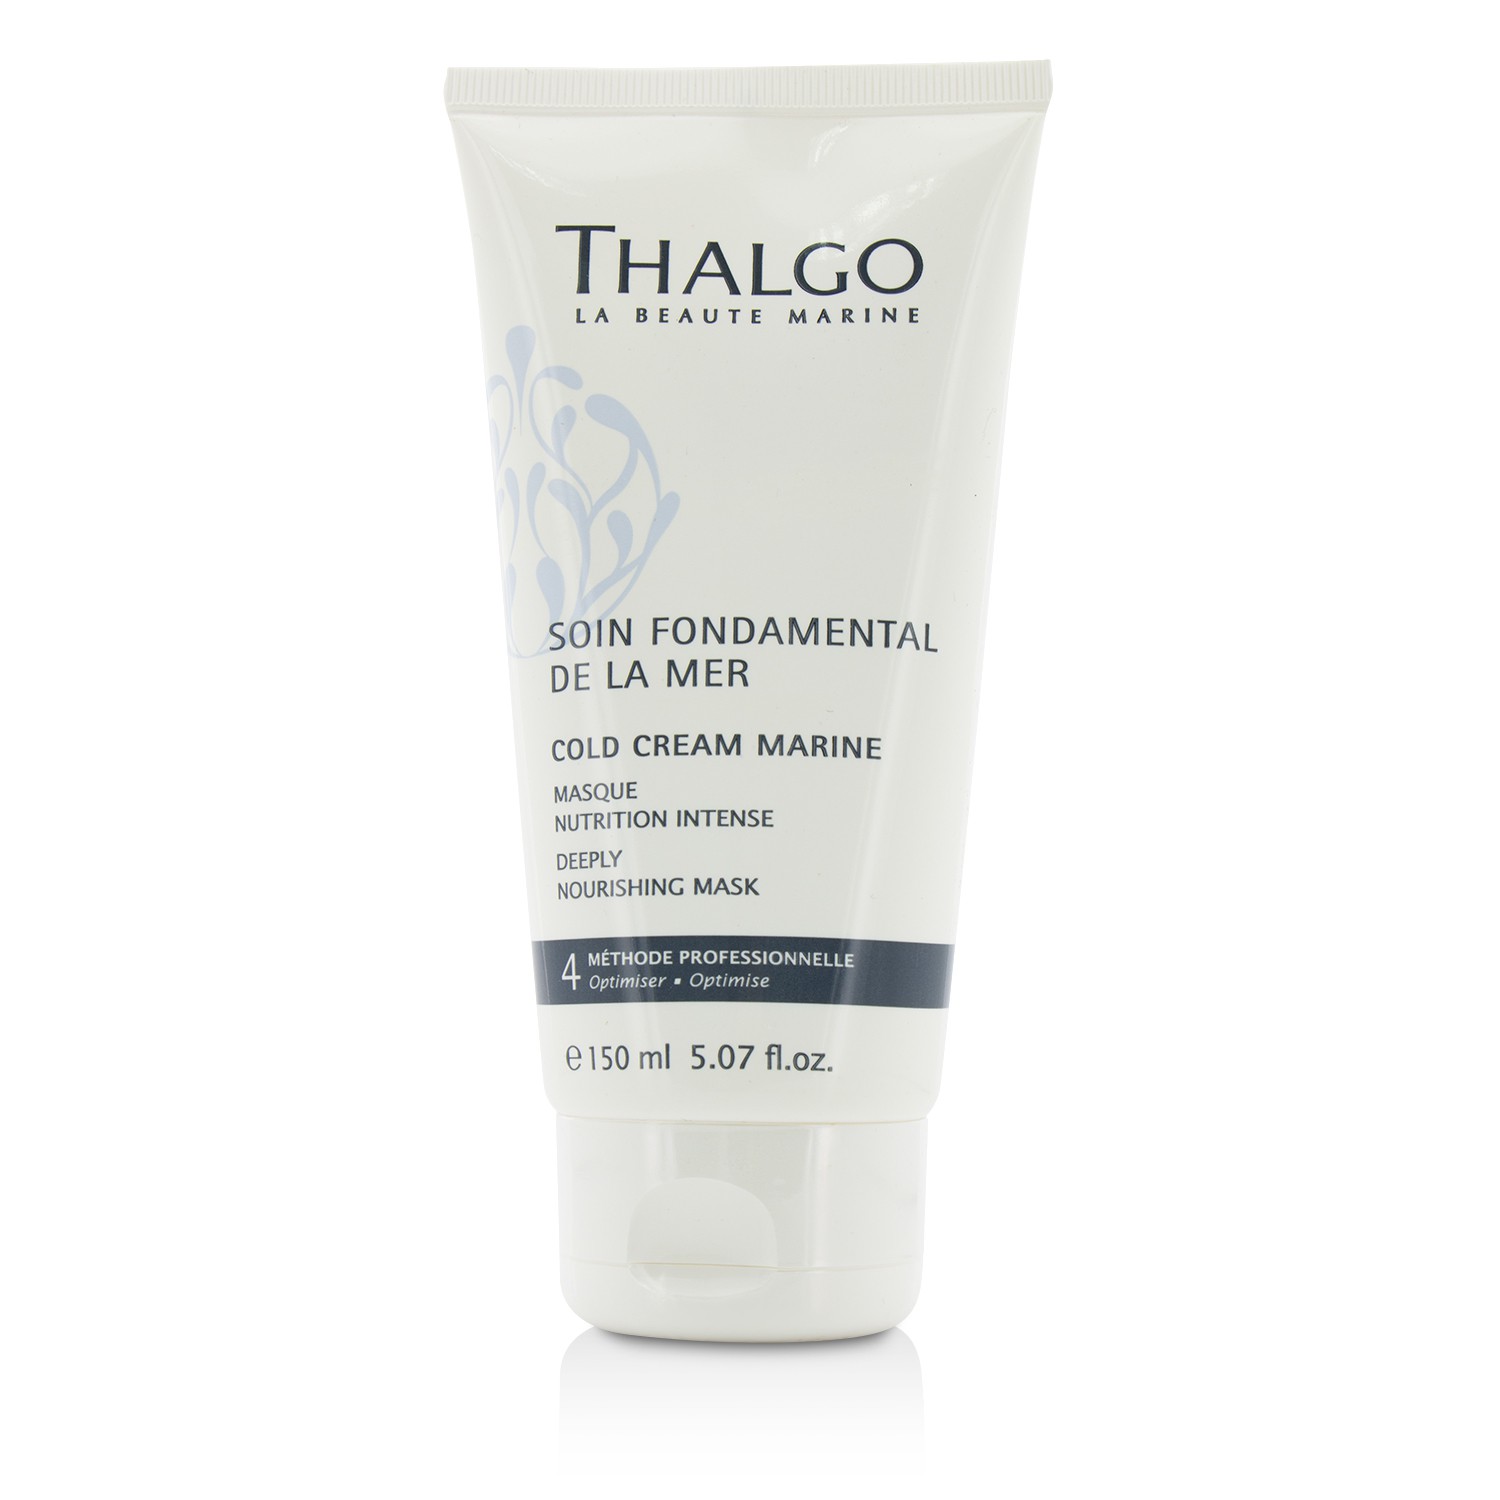 Cold Cream Marine Deeply Nourishing Mask - For Dry Sensitive Skin (Salon Size) Thalgo Image